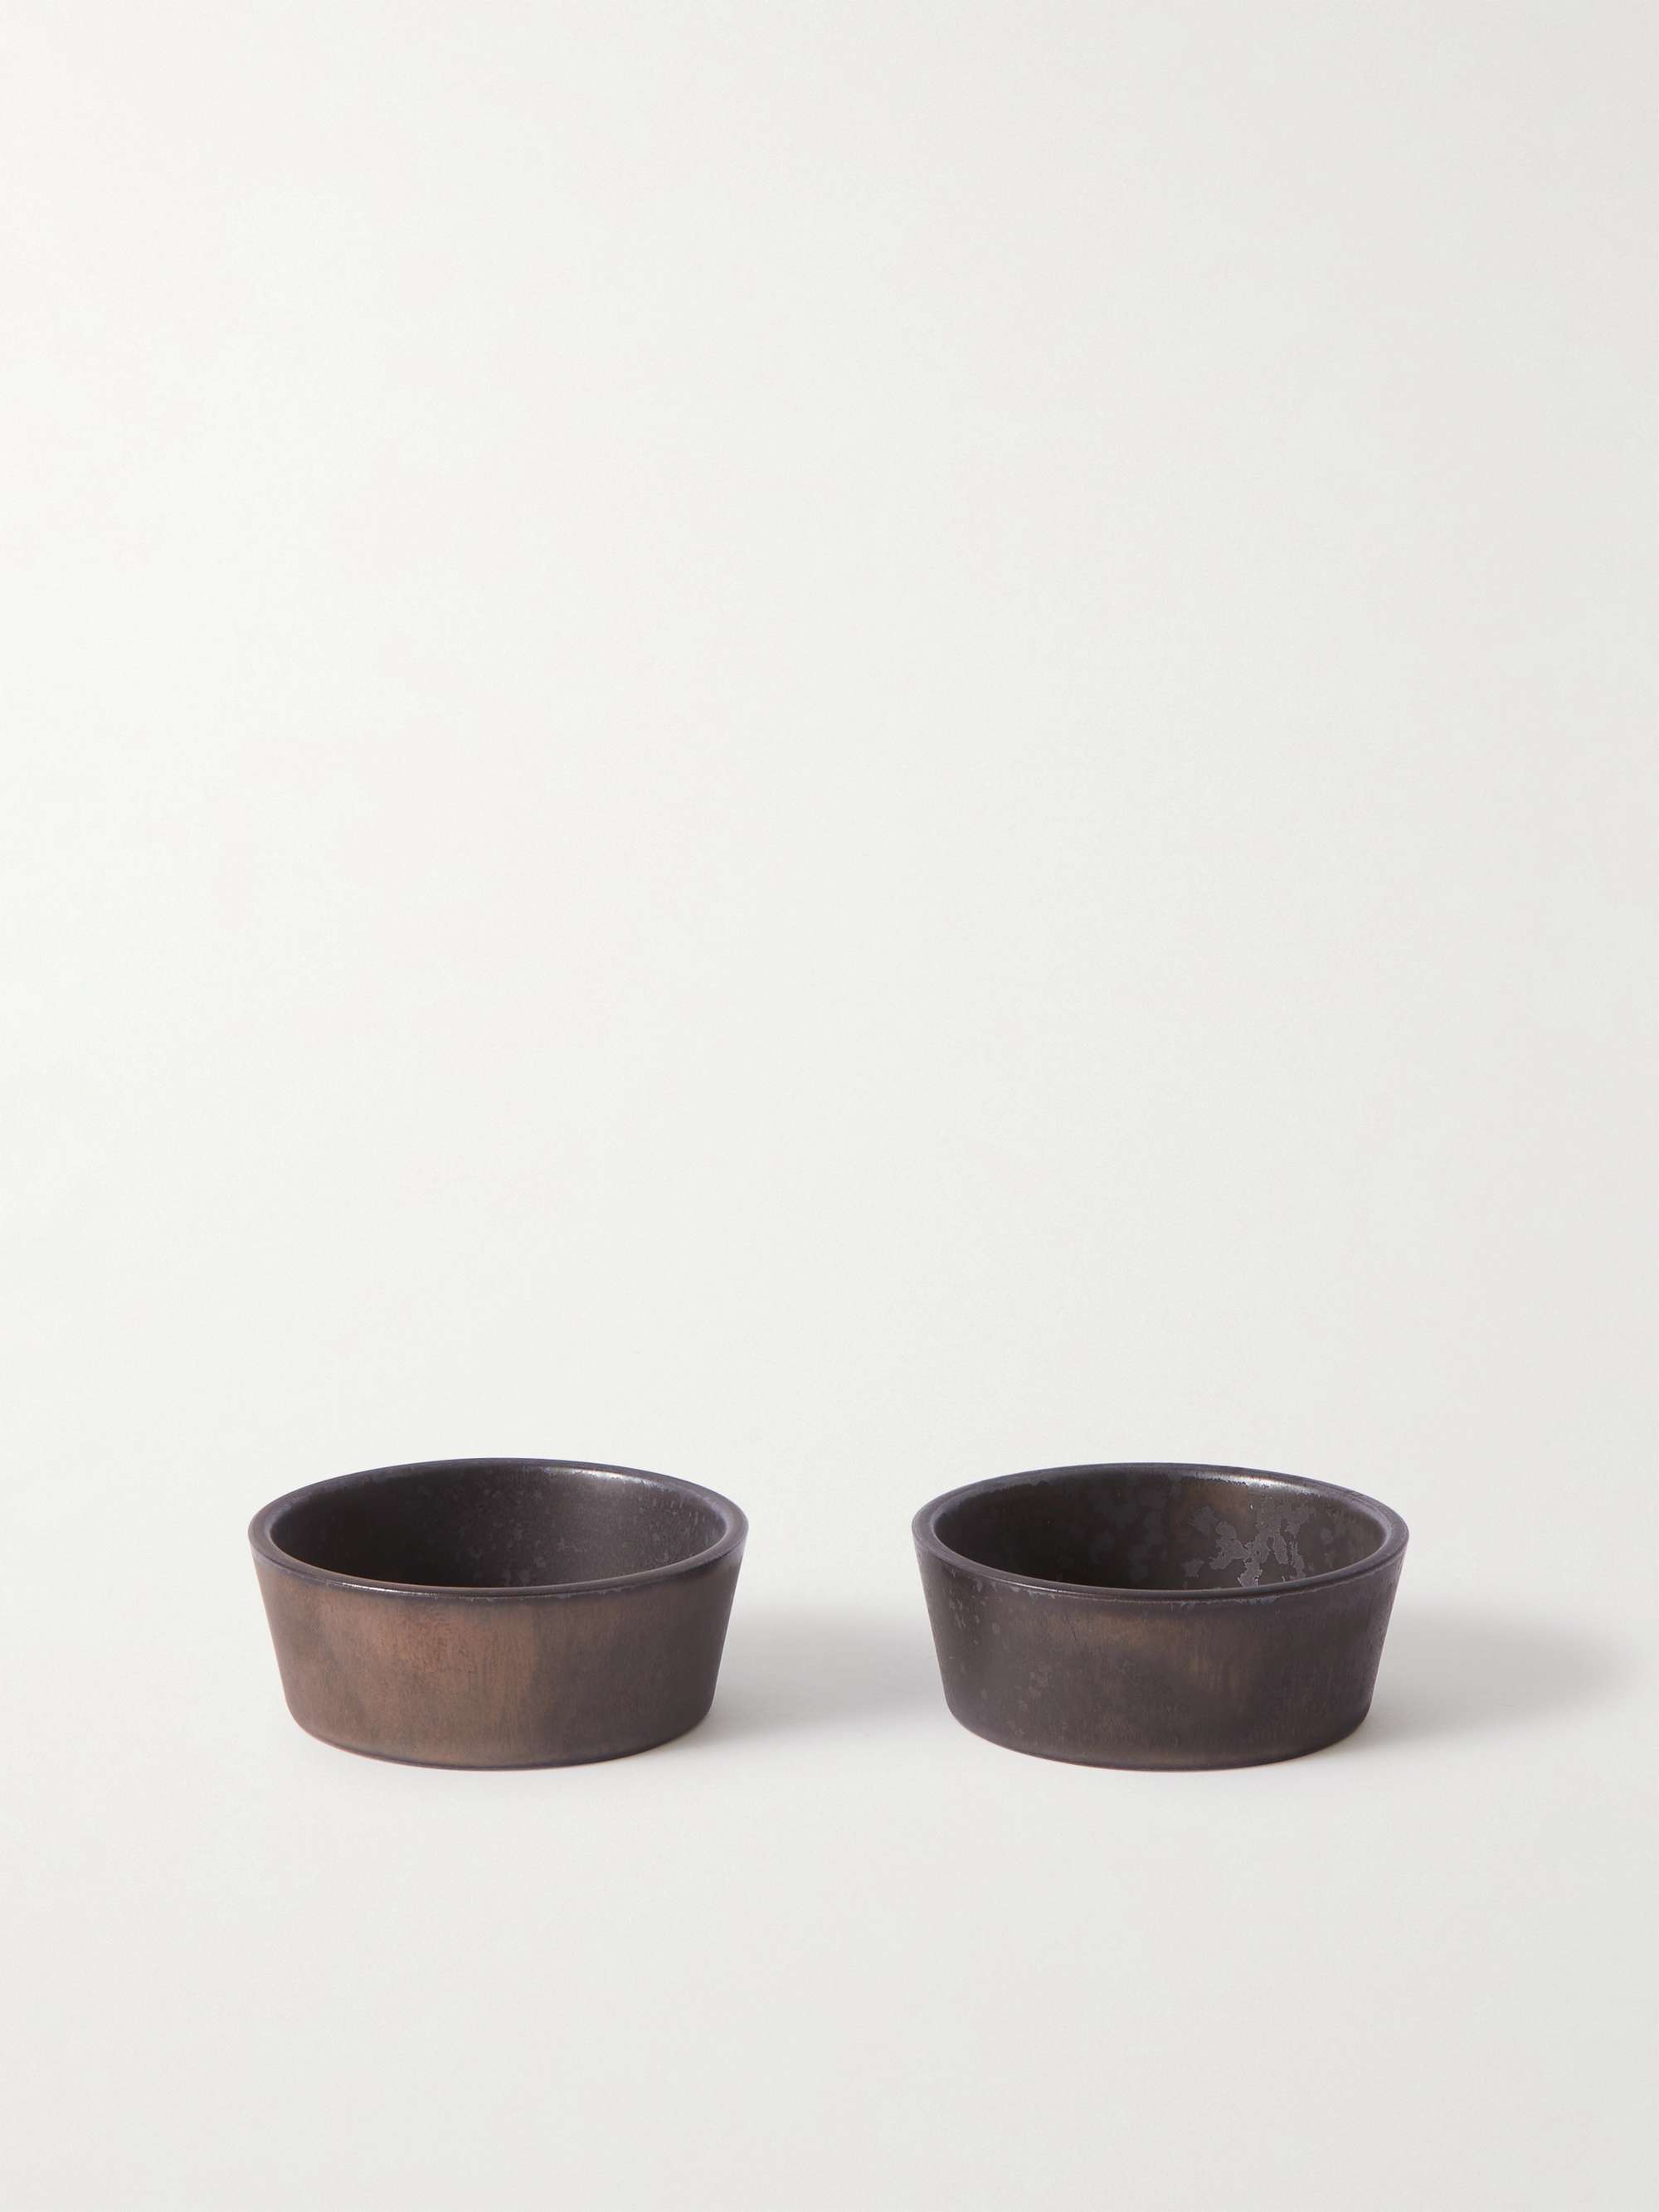 BY JAPAN + SyuRo Set of Two Small Glazed Ceramic Bowls